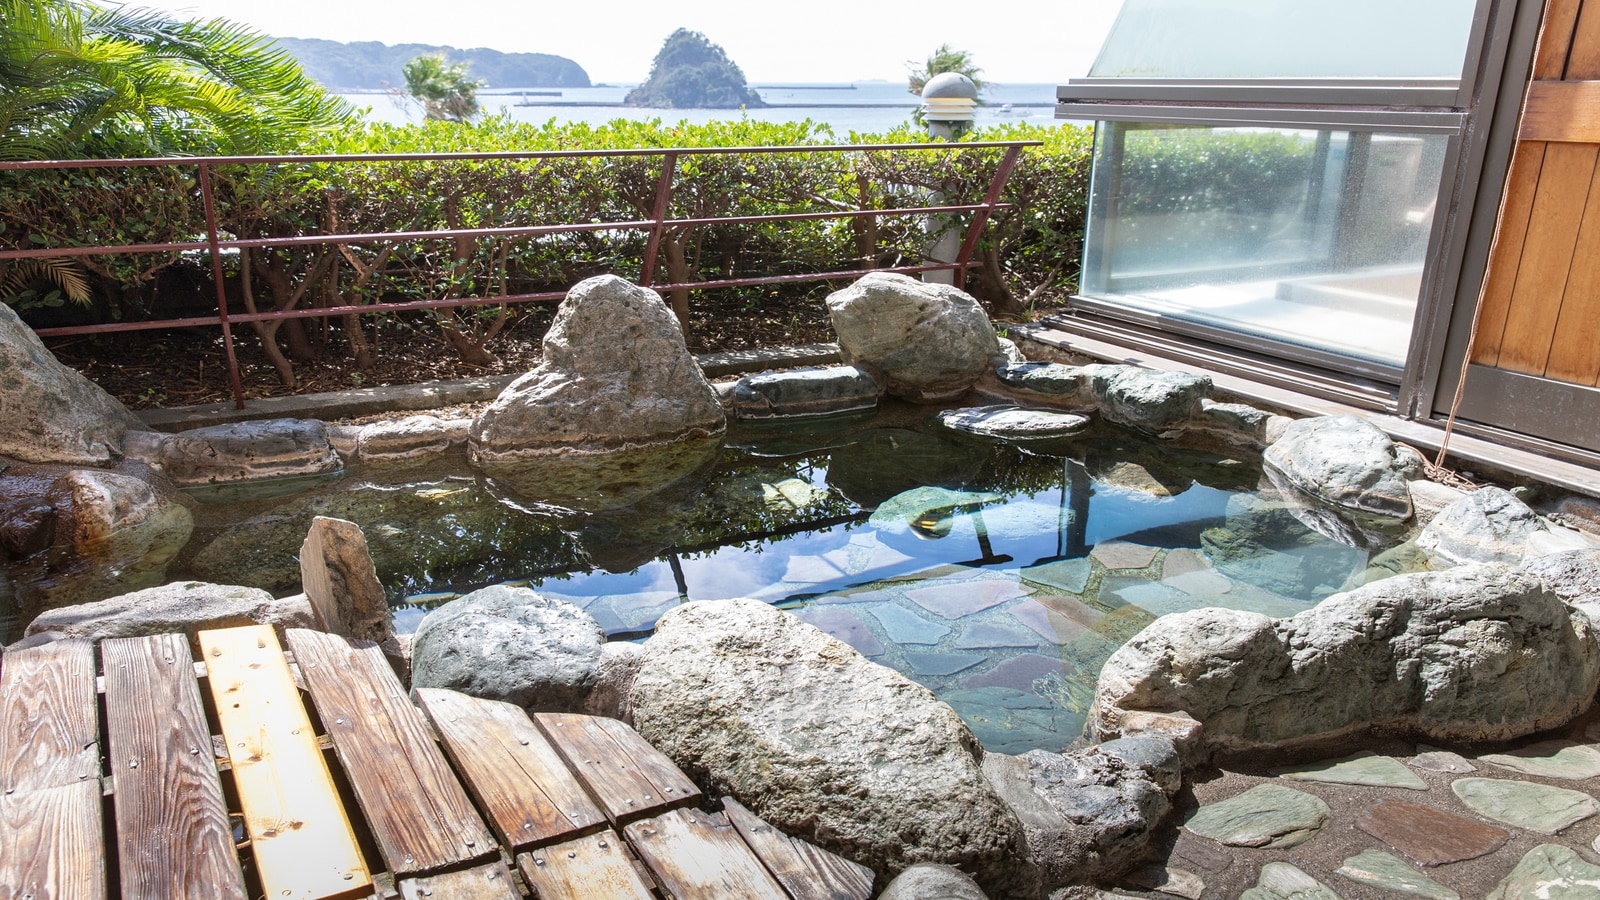 ■ East Building ■ 66㎡ Honma 12.5 tatami mats + wide rim + cypress bath + private open-air bath